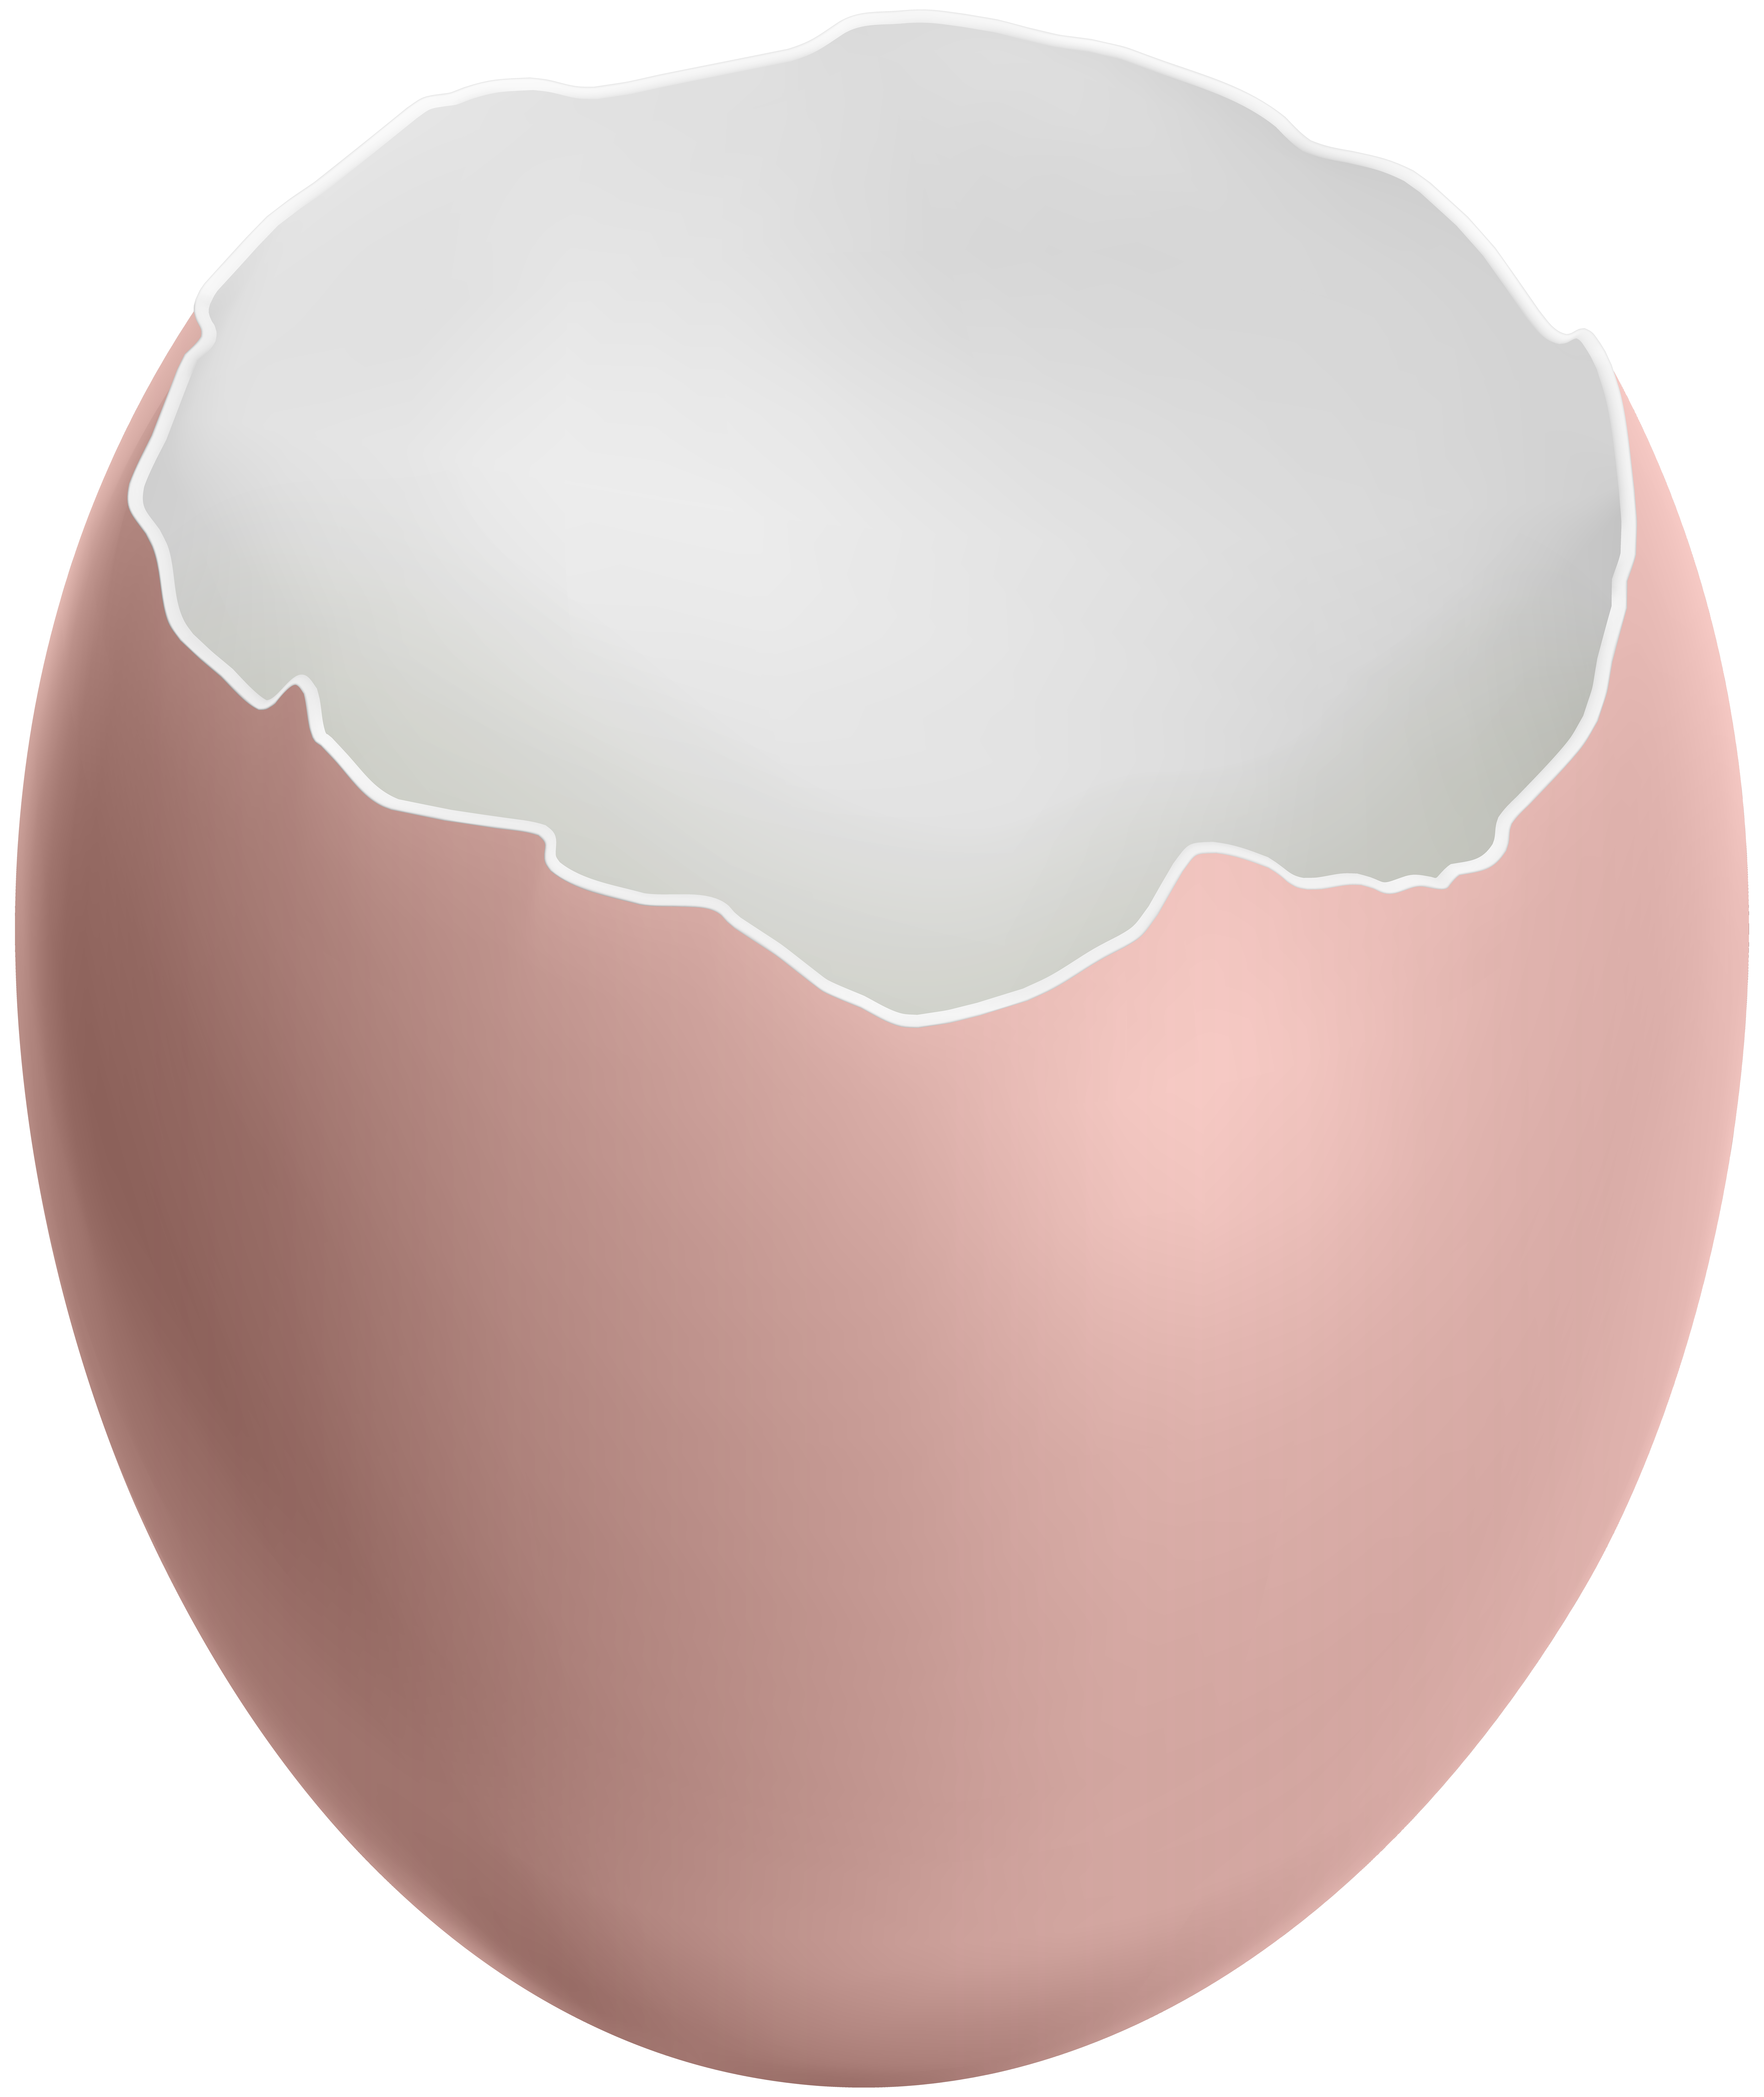 eggs clipart bowl